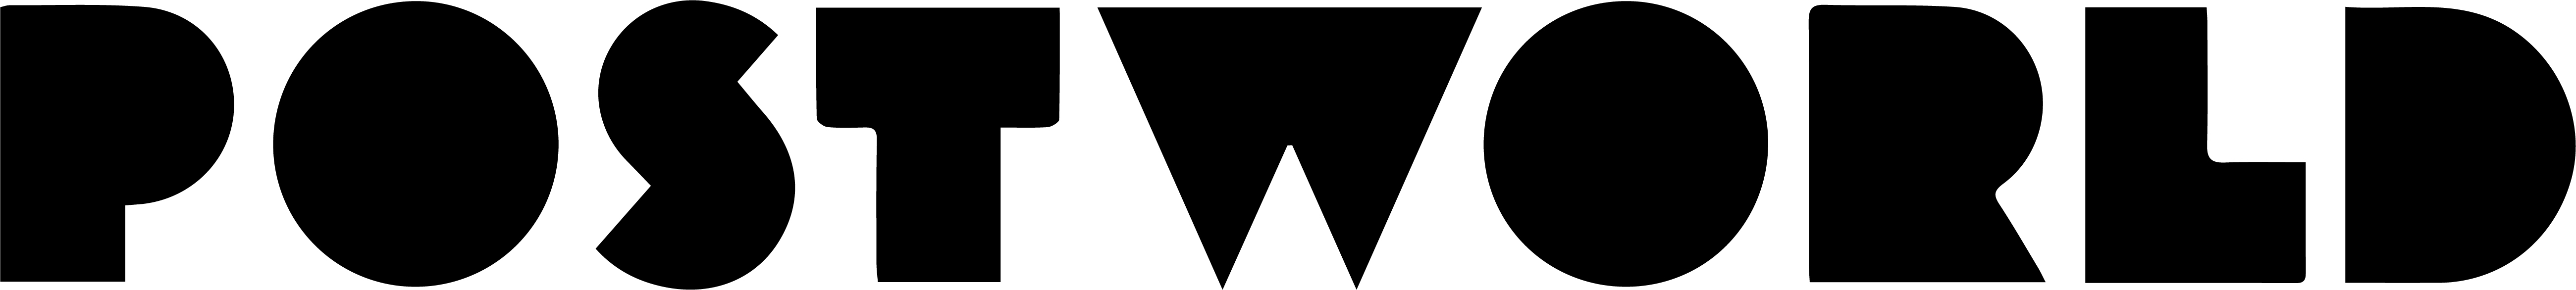 POSTWORLD logo